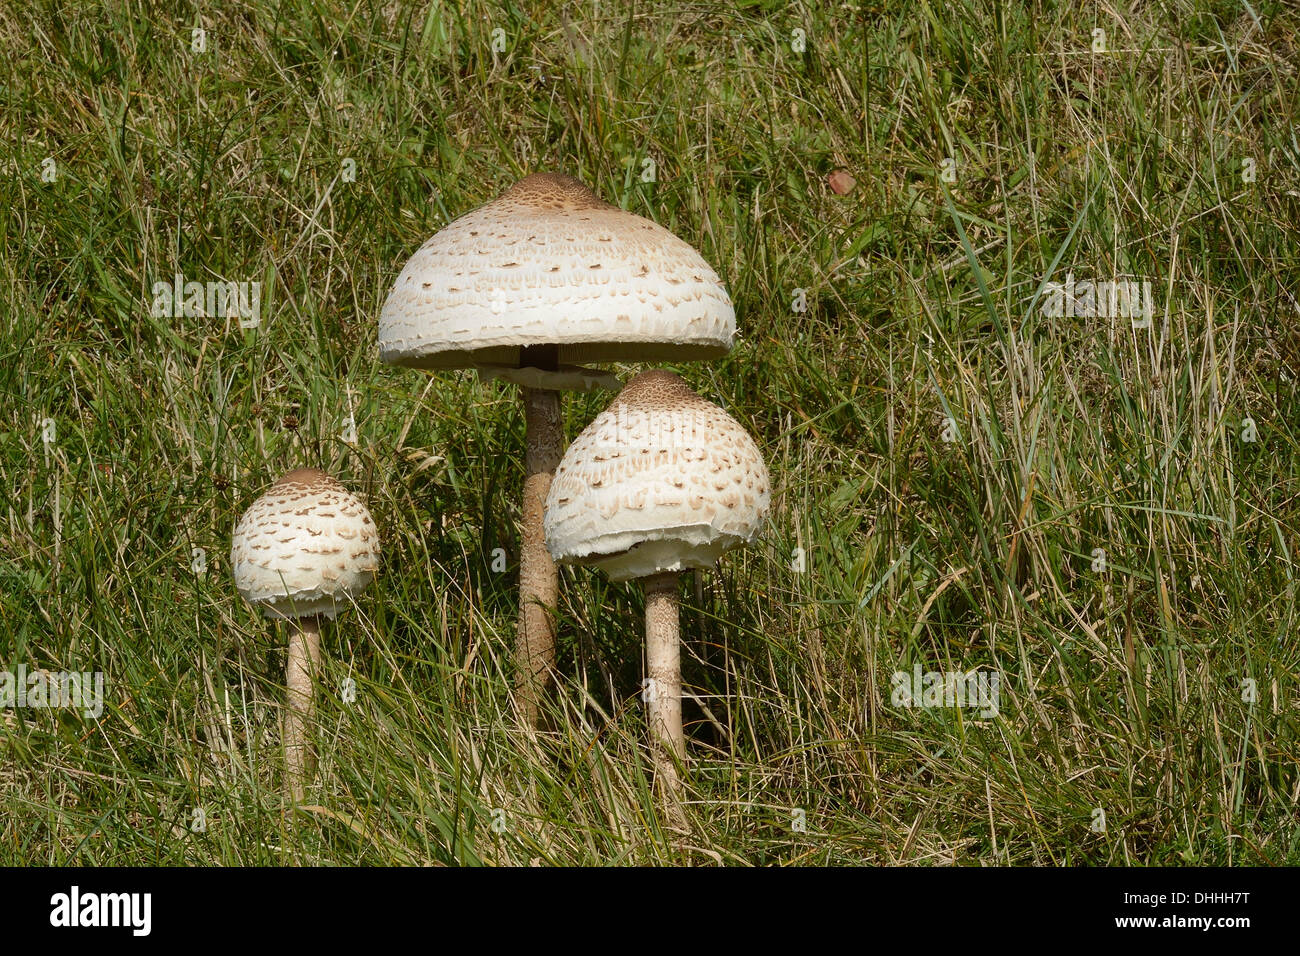 Setas parasol (Macrolepiota procera), hongos comestibles, Rømø, Dinamarca Foto de stock